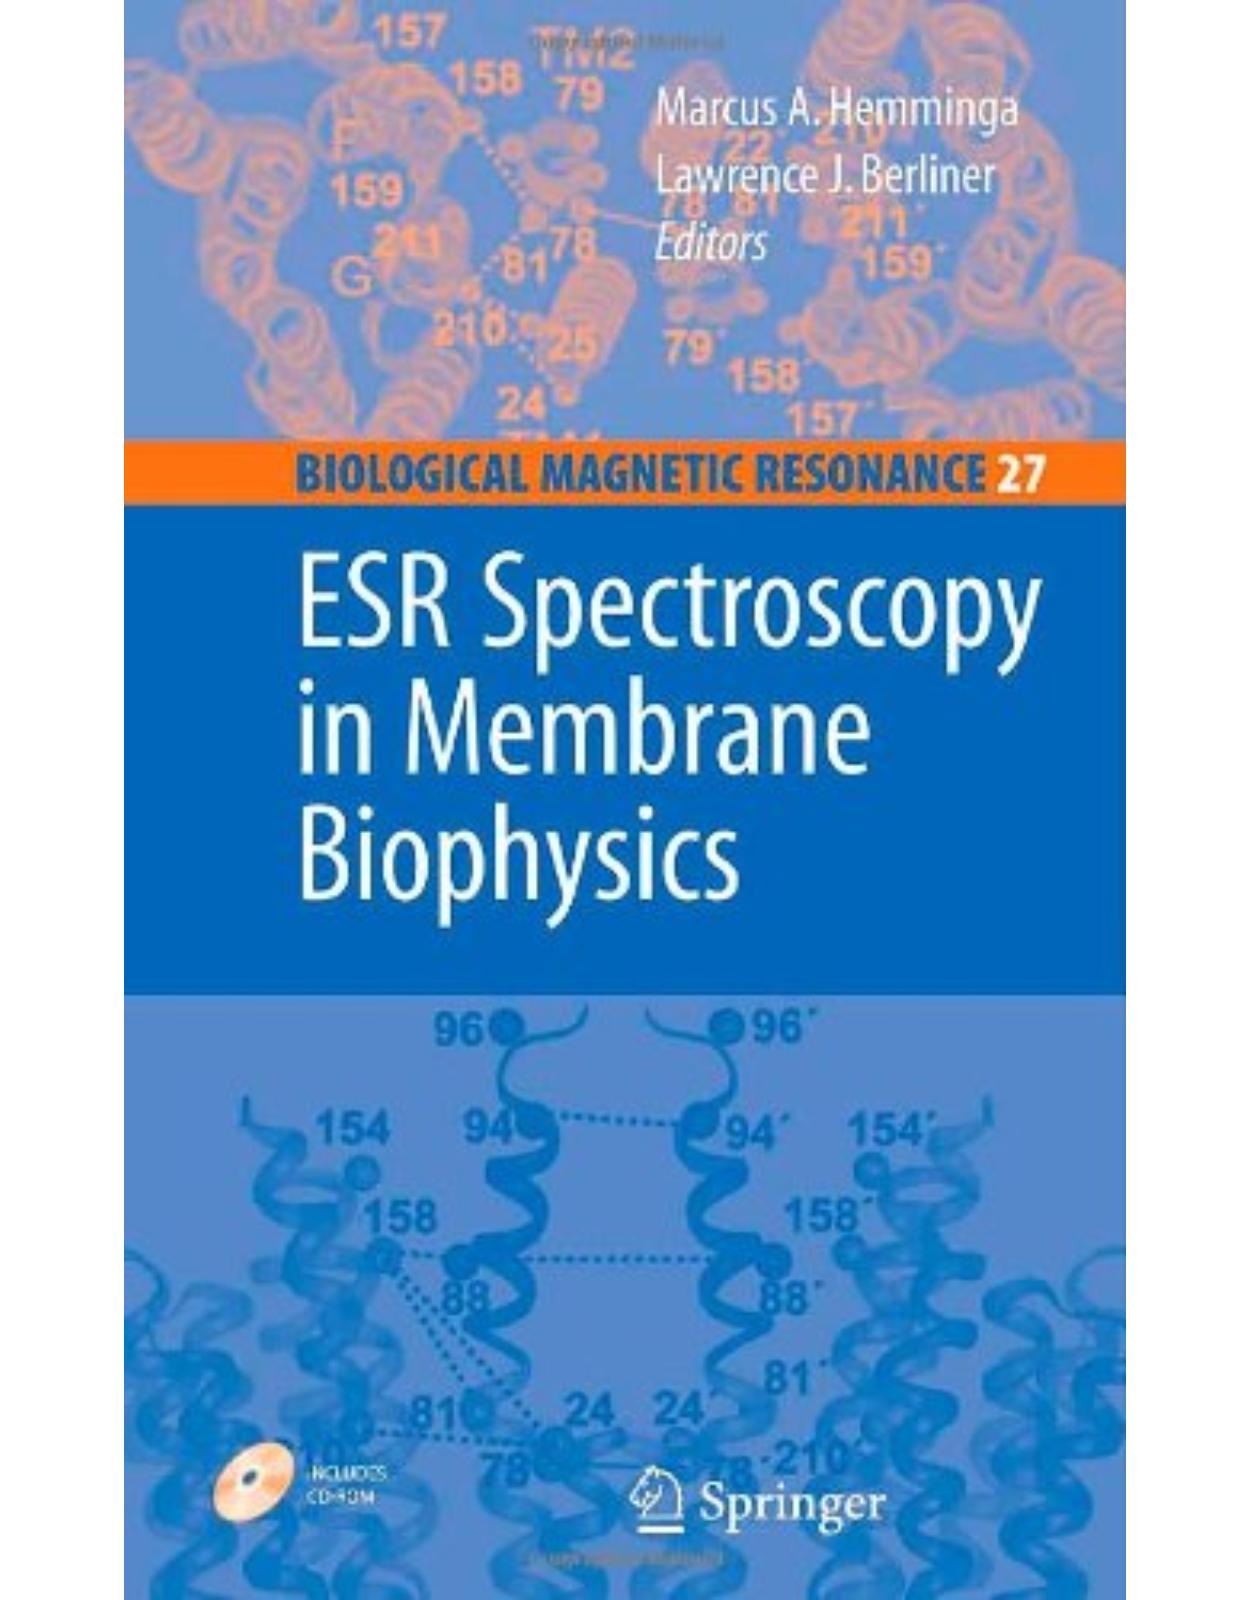 ESR Spectroscopy in Membrane Biophysics: 27 (Biological Magnetic Resonance)